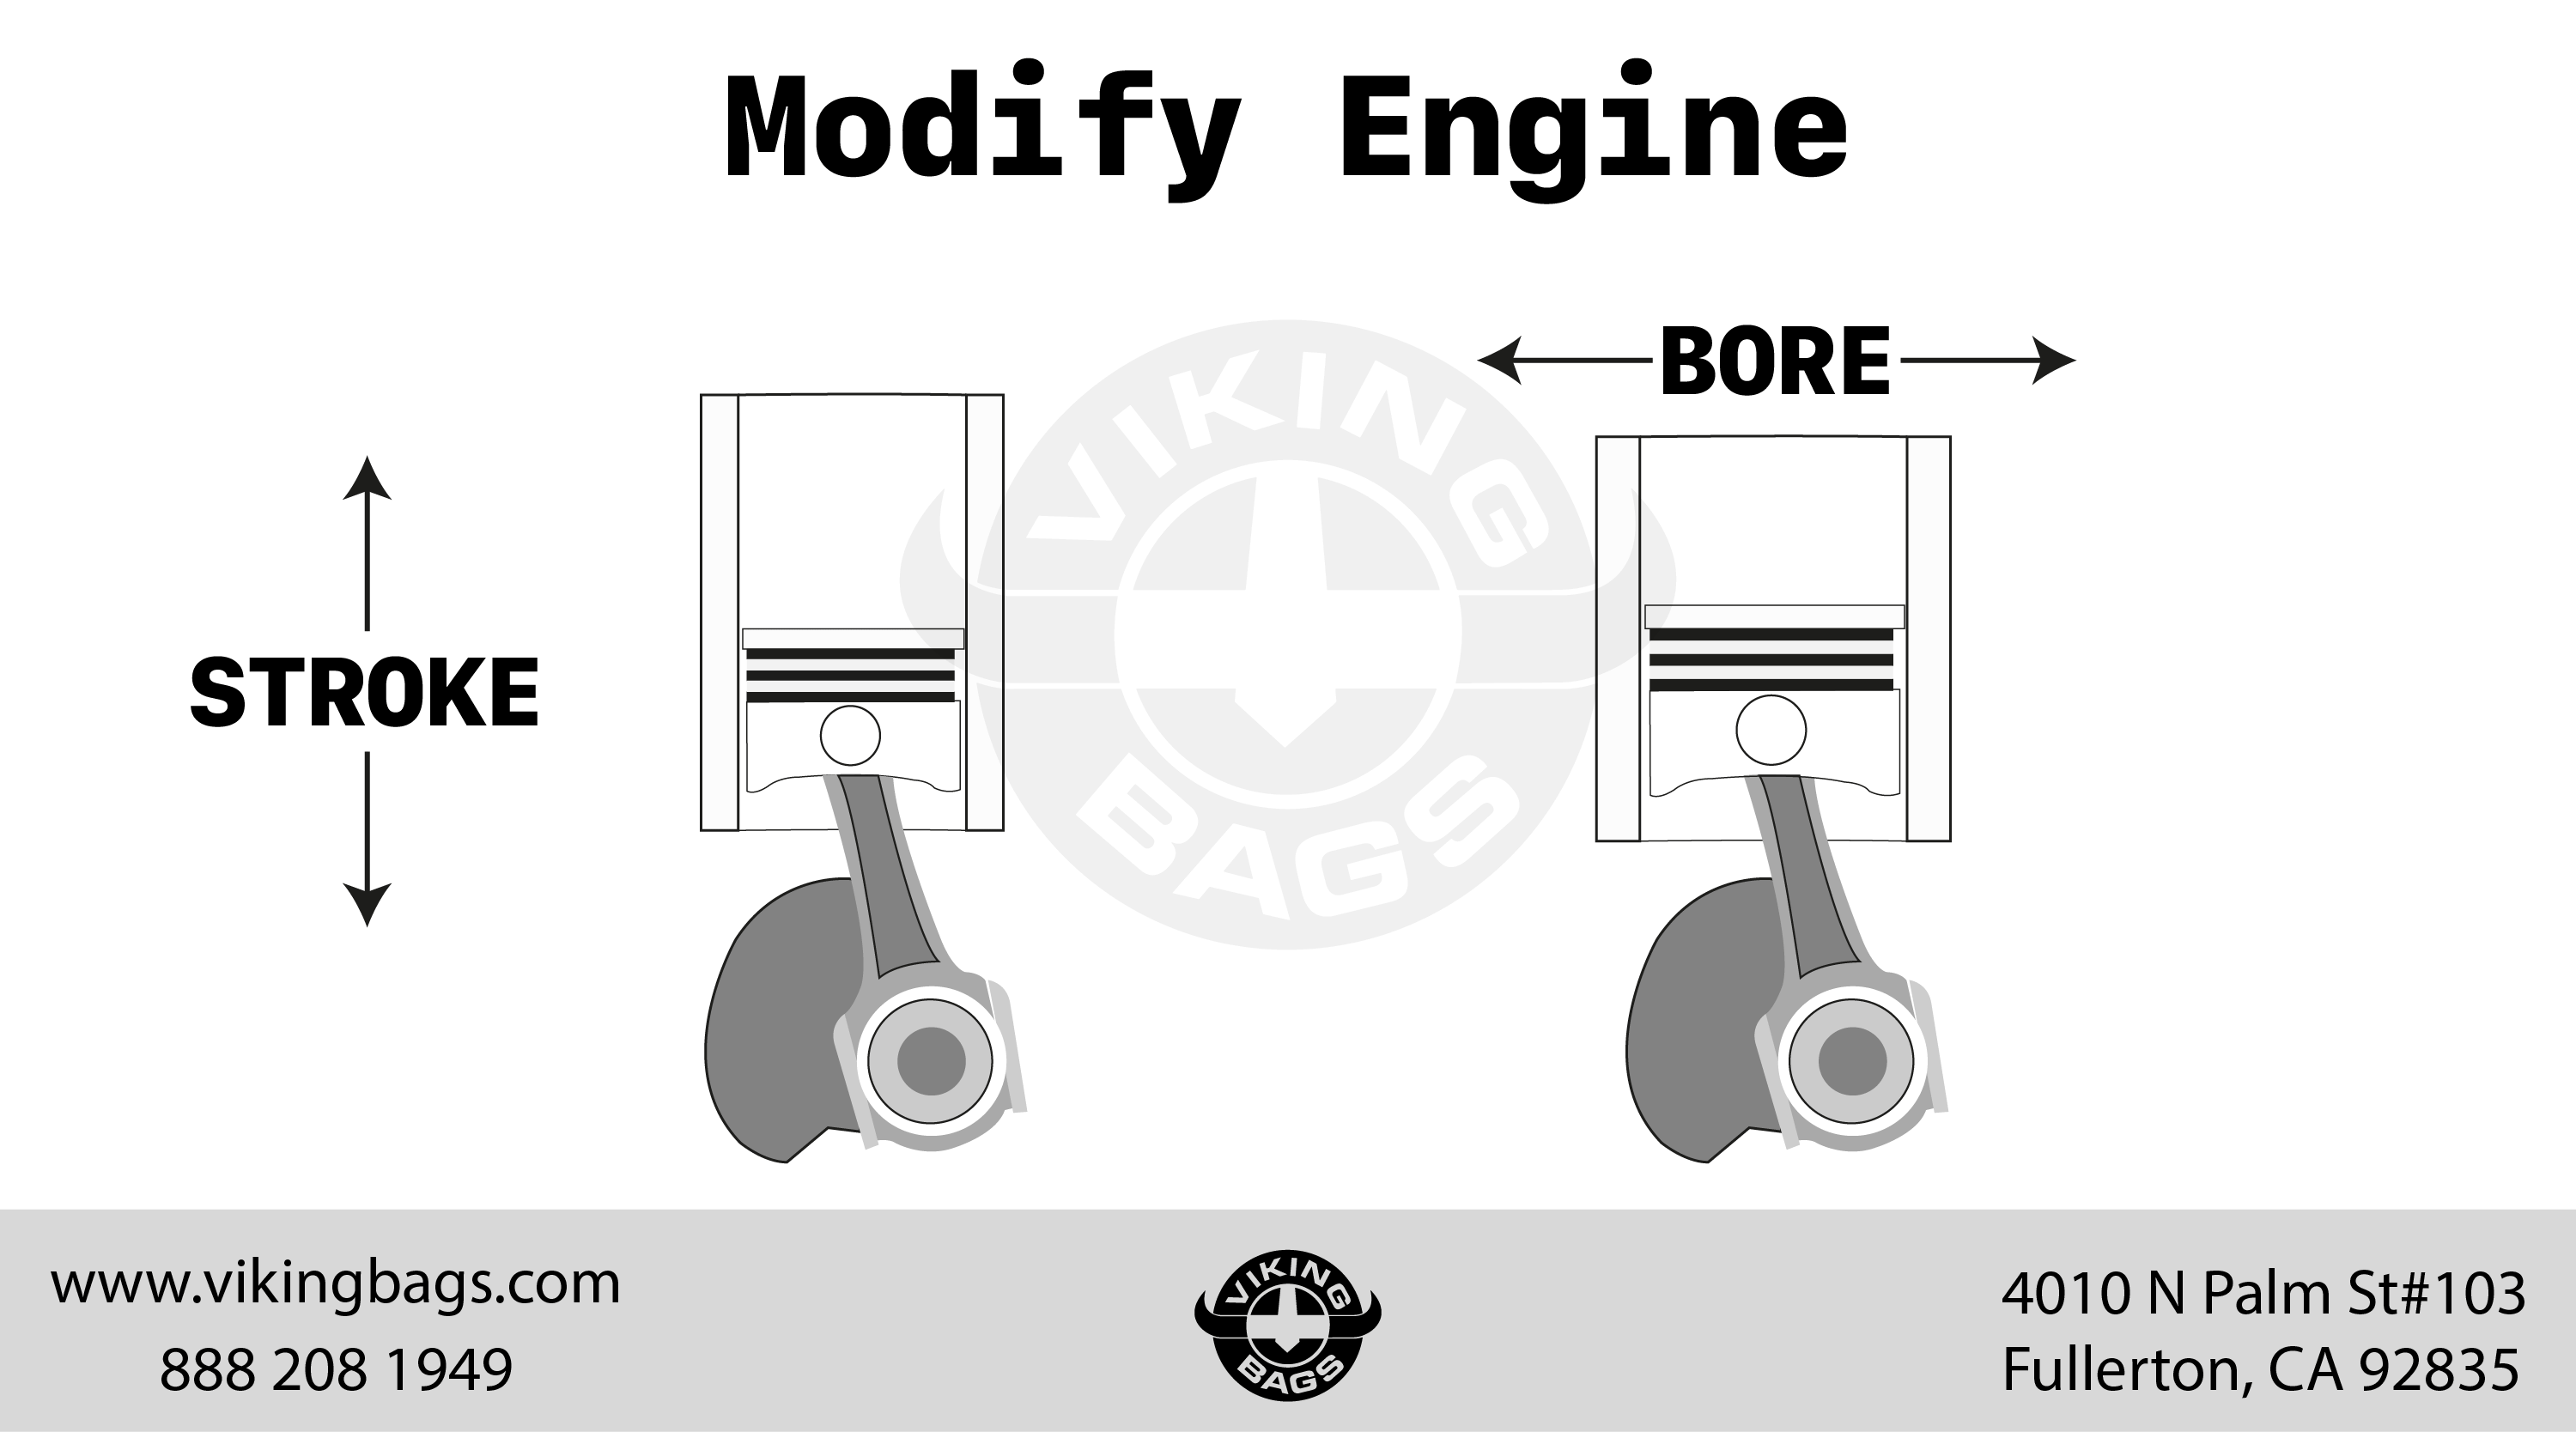 Modify Engine: